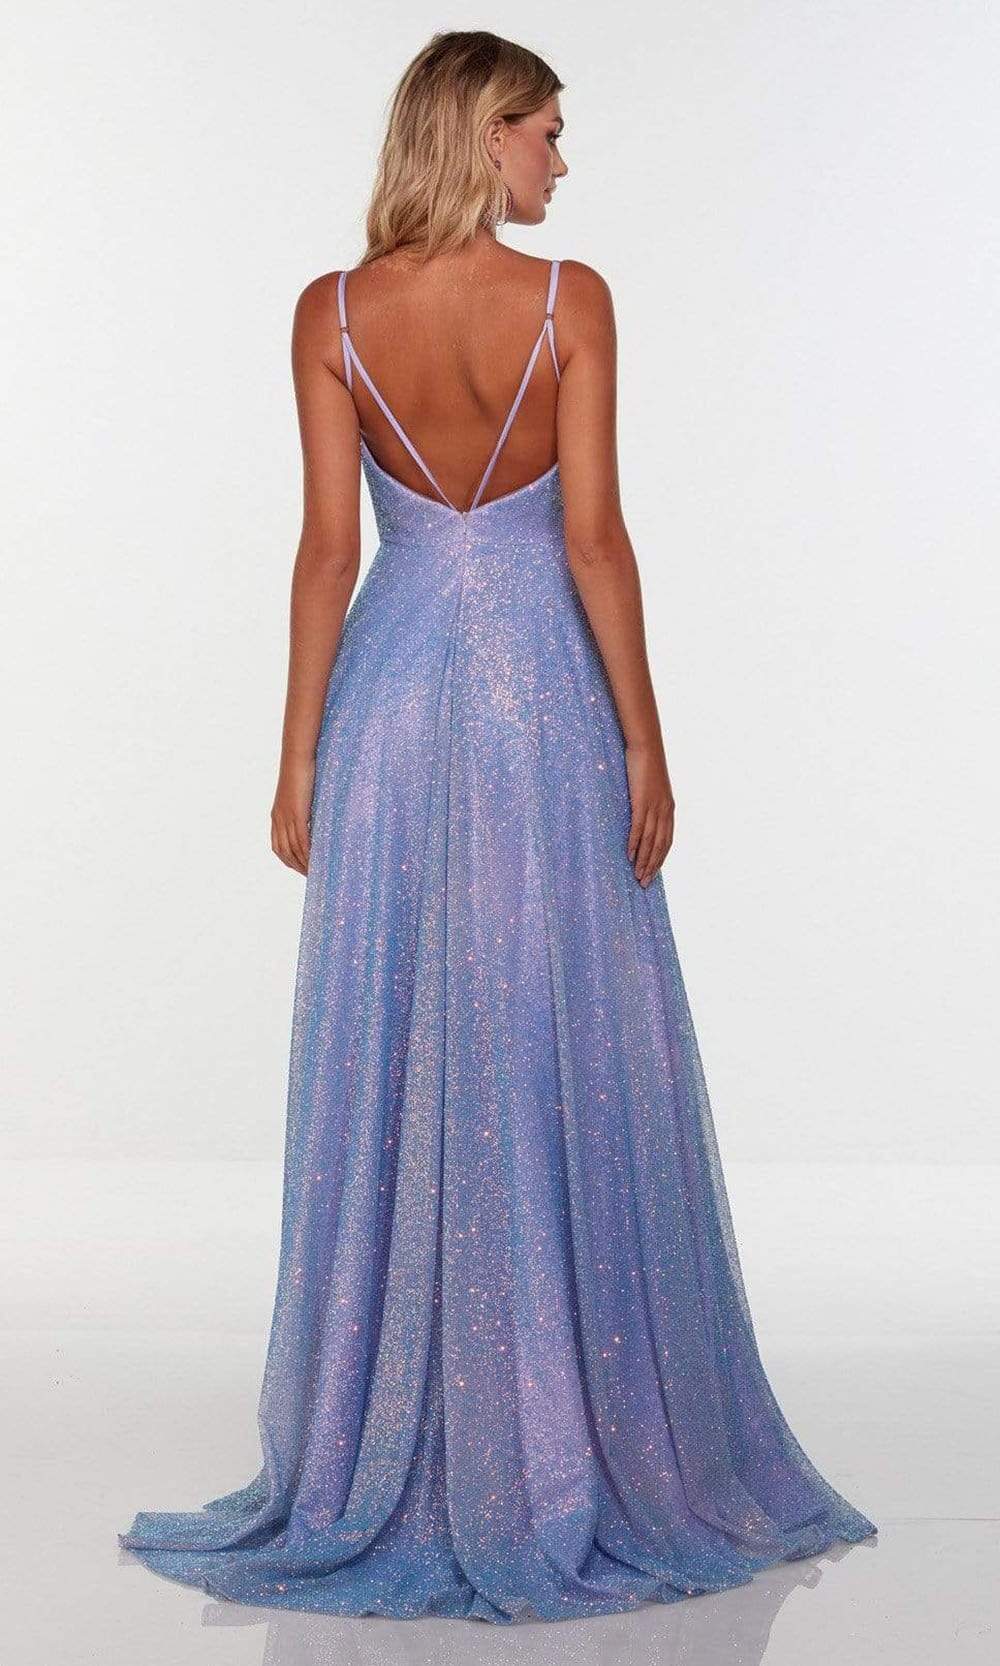 Alyce Paris - 61091 Glittery High Waisted Flowy Dress Prom Dresses